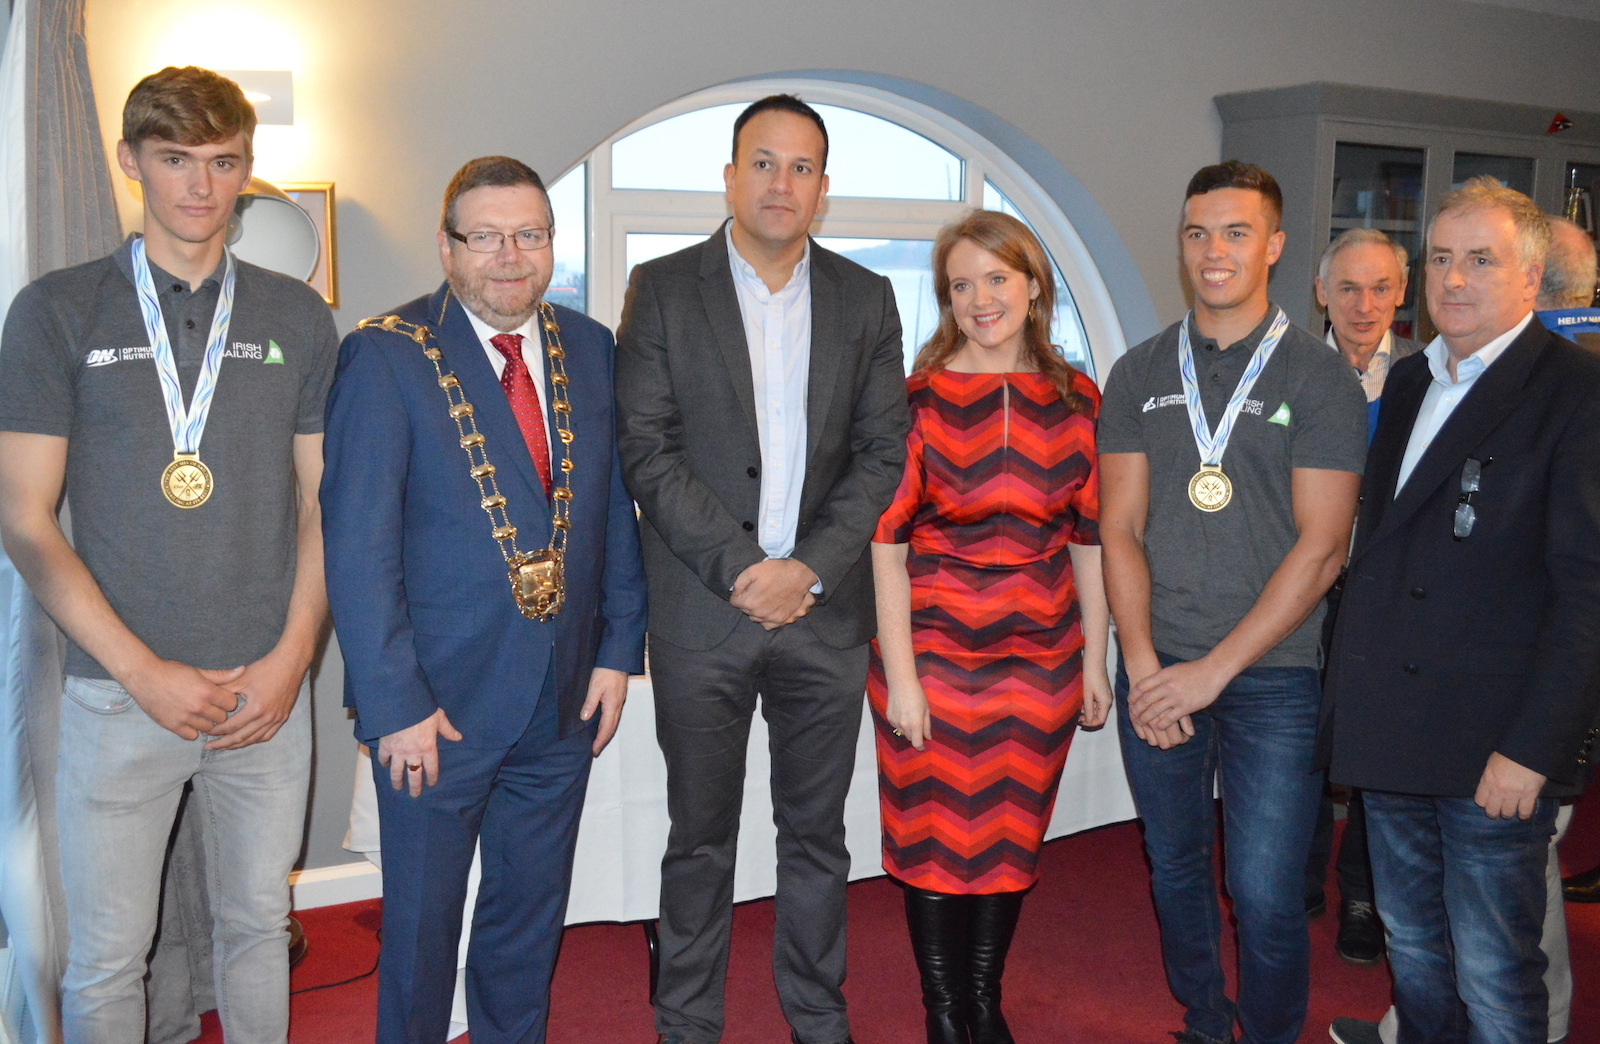 Gold medallists Robert Dickson and Sean Waddilove with Fingal Mayor Anthony Lavin, An Taoiseach, Senator Catherine Noone and Commodore Joe McPeake